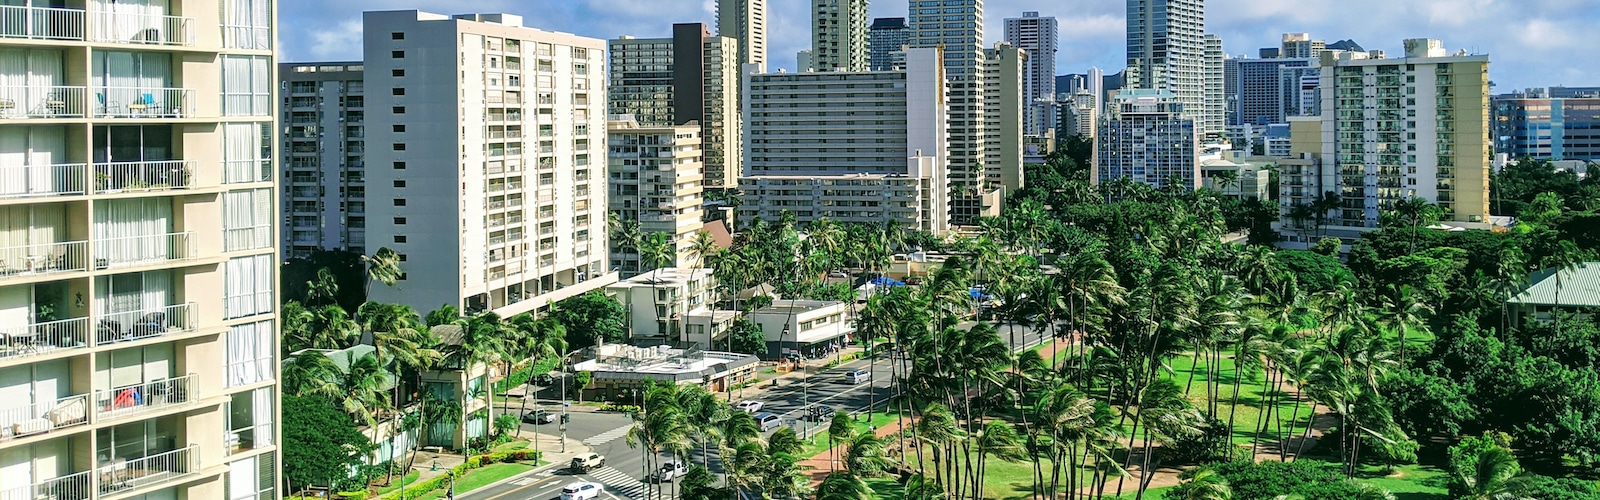 Navigating Waikiki, About Waikiki, Oahu, Hawaii